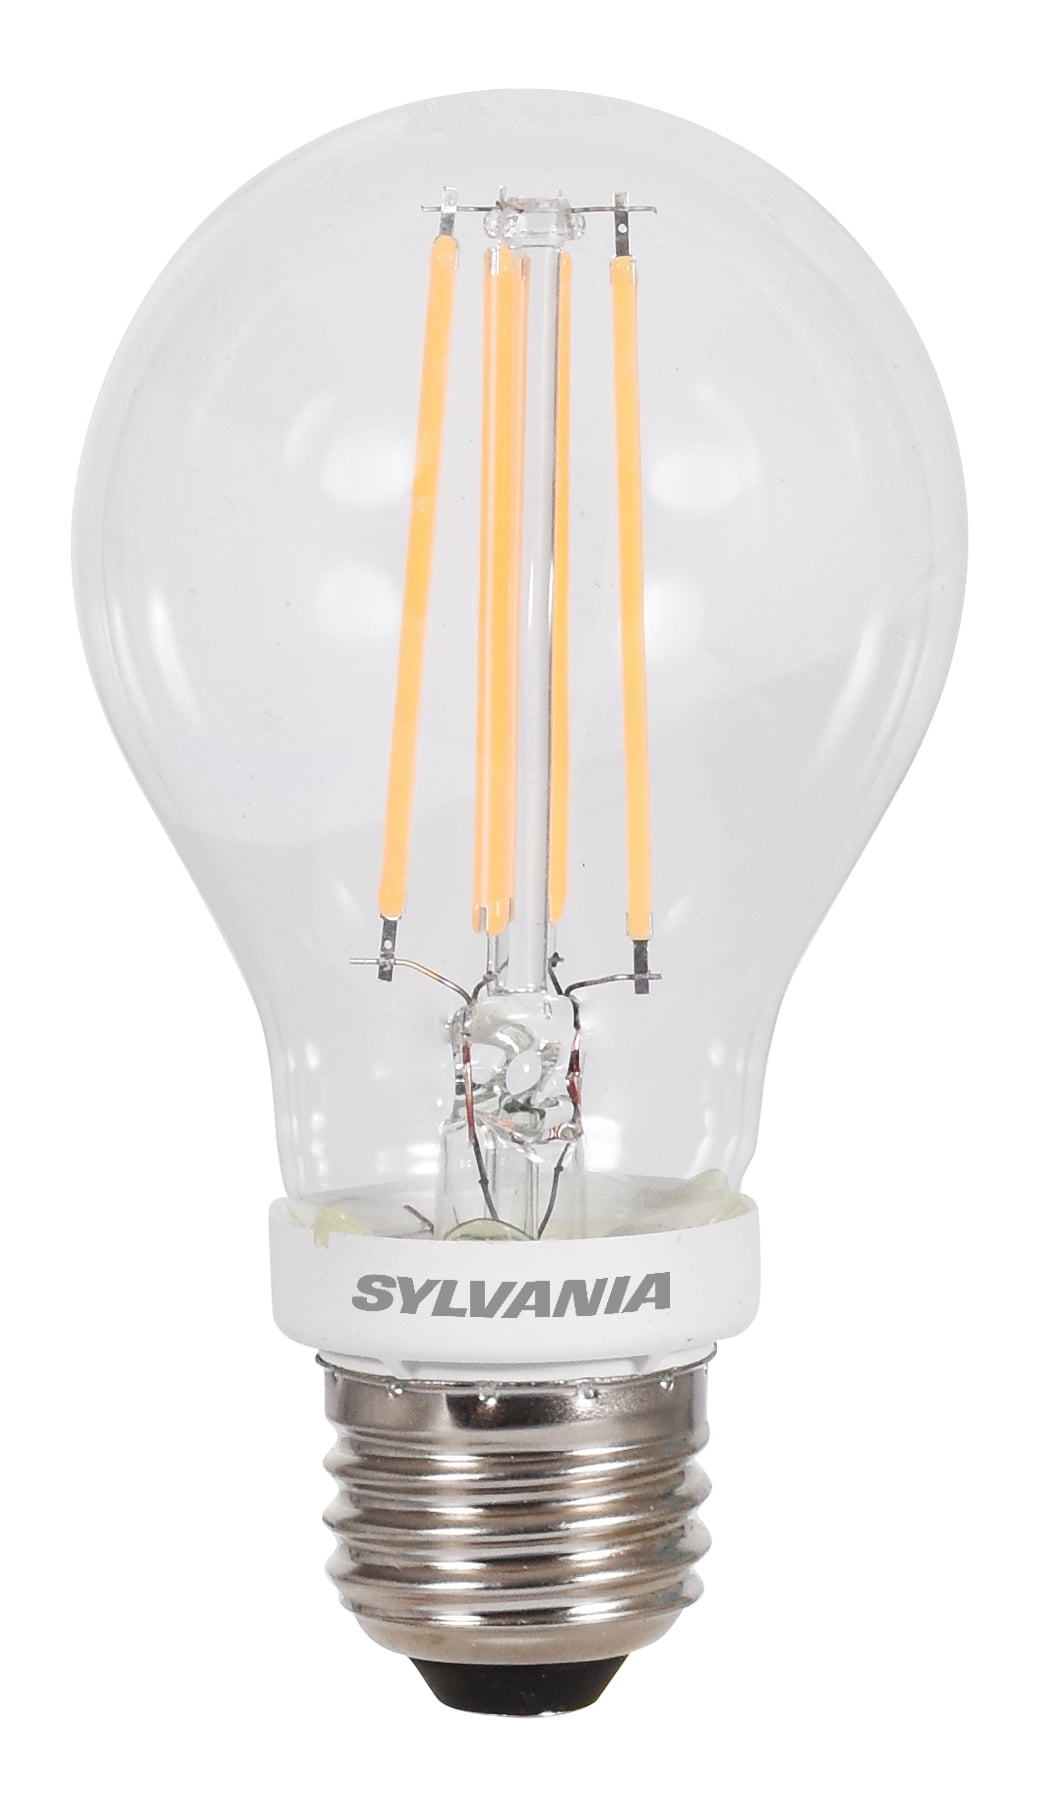 PR12 Miniature Lamps Light Bulbs for sale online 4 Boxes of 10 SYLVANIA No 